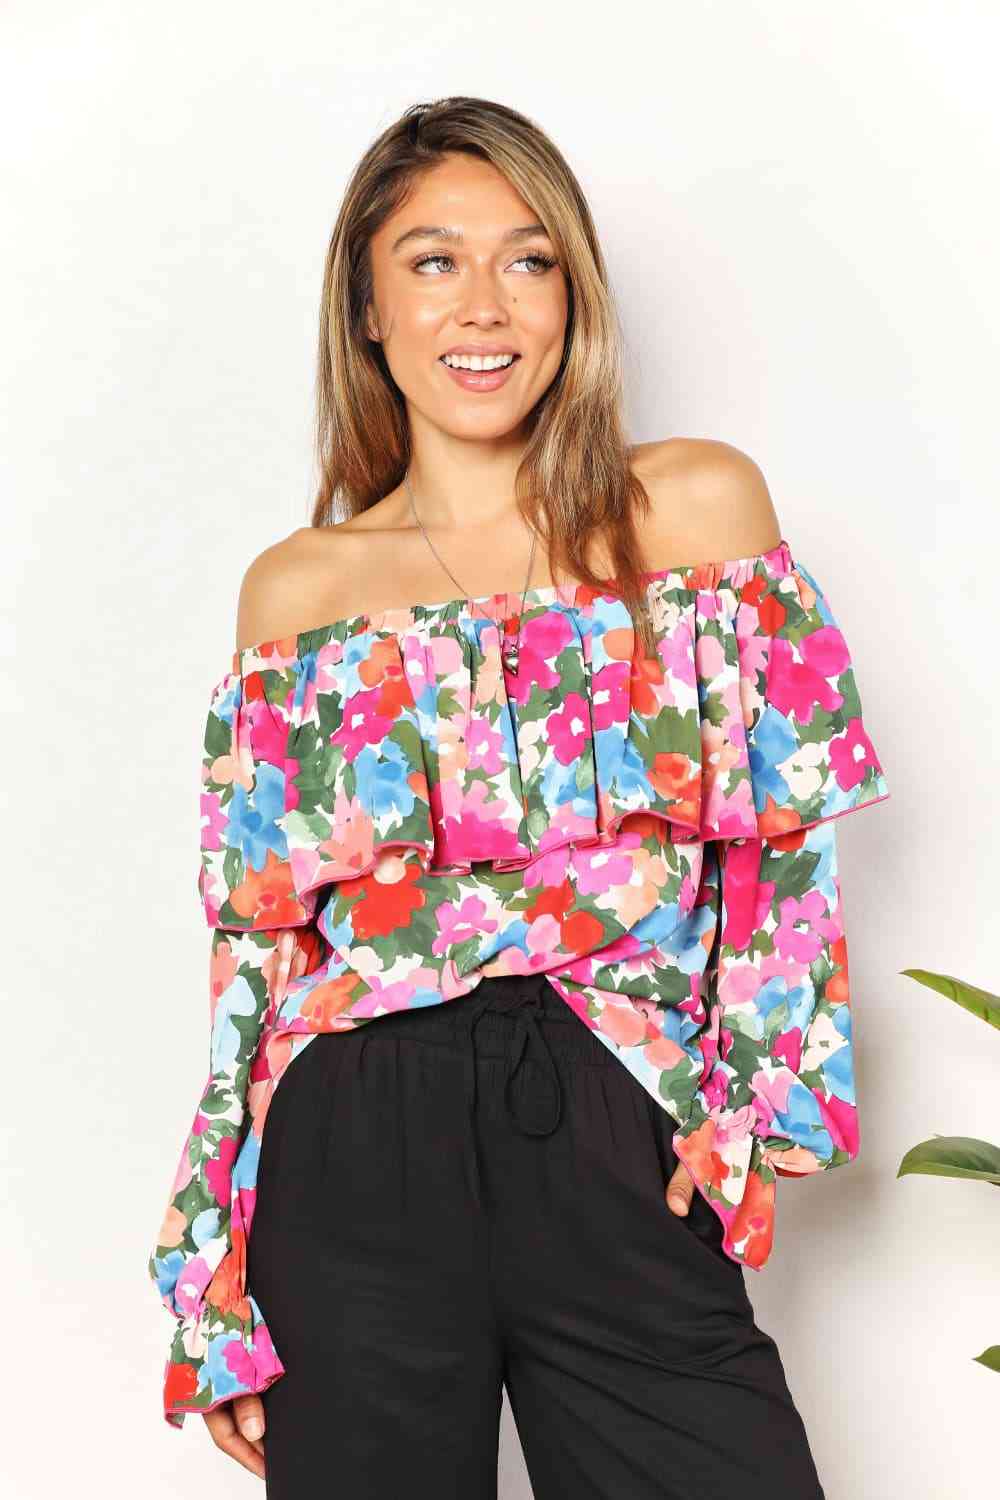 Slay Lux Flower Blouse - Slay Trendz Fashion Boutique